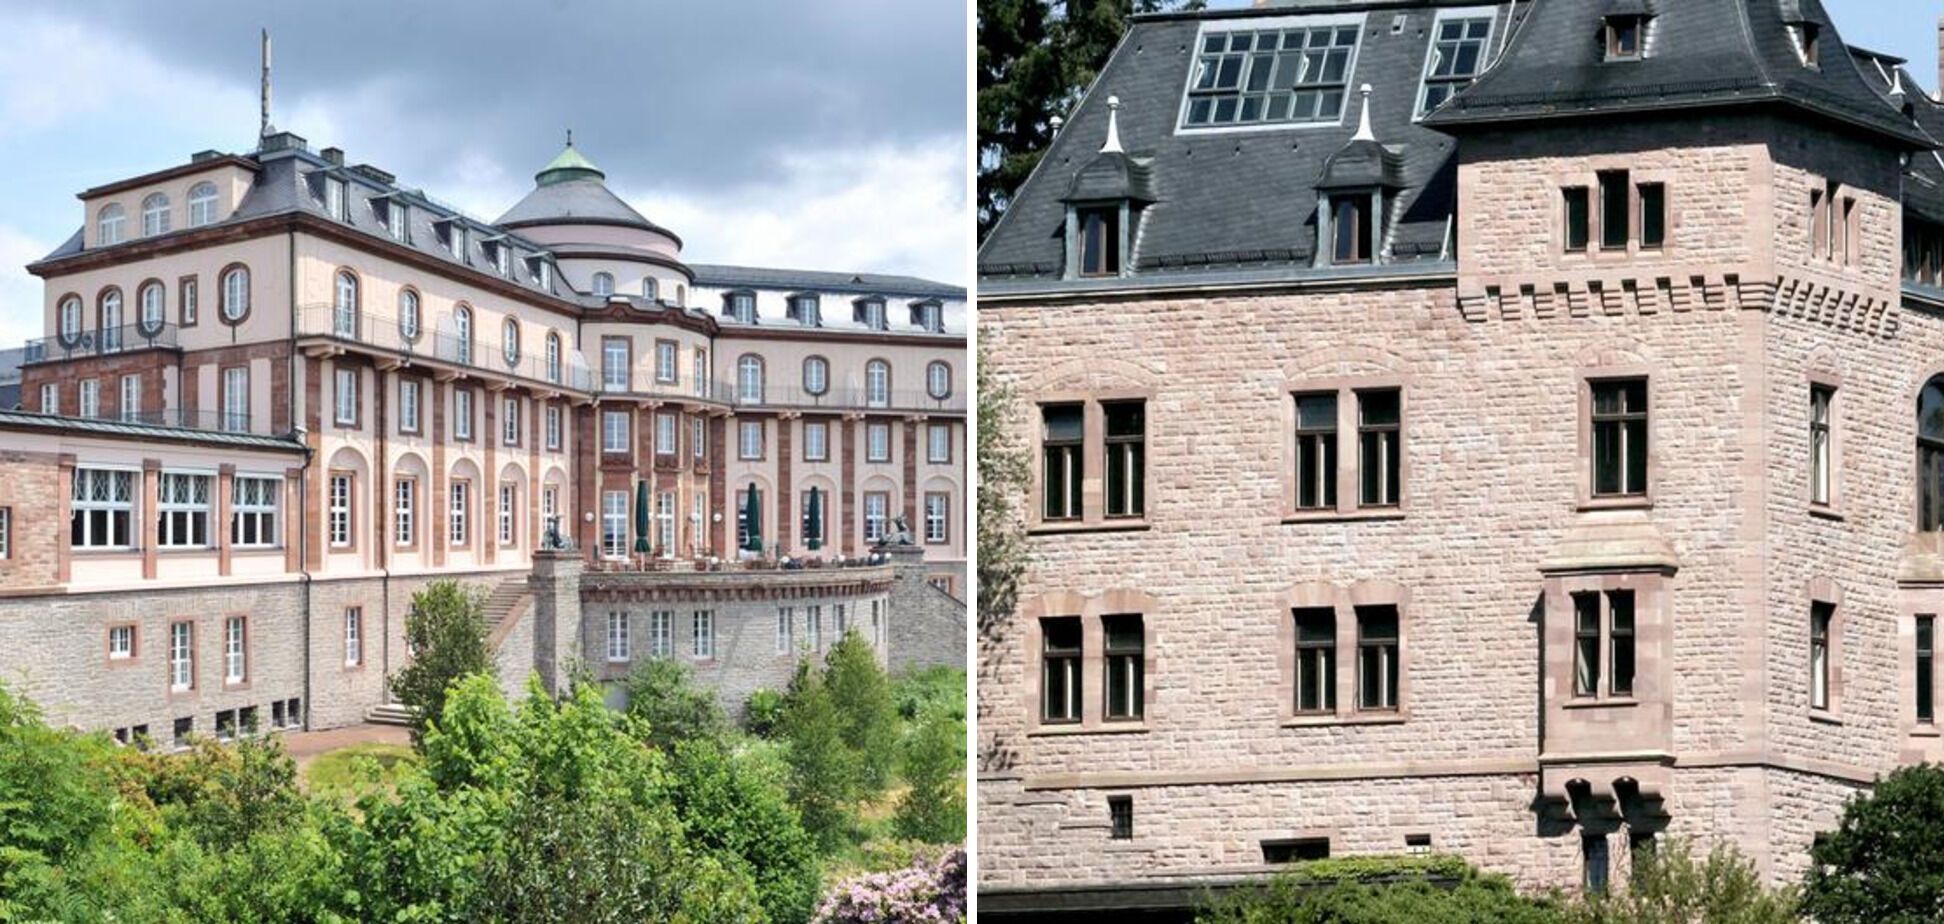 Зліва – замок-готель Бюлерхое поблизу Баден-Бадена, праворуч – вілла архітектора Штро